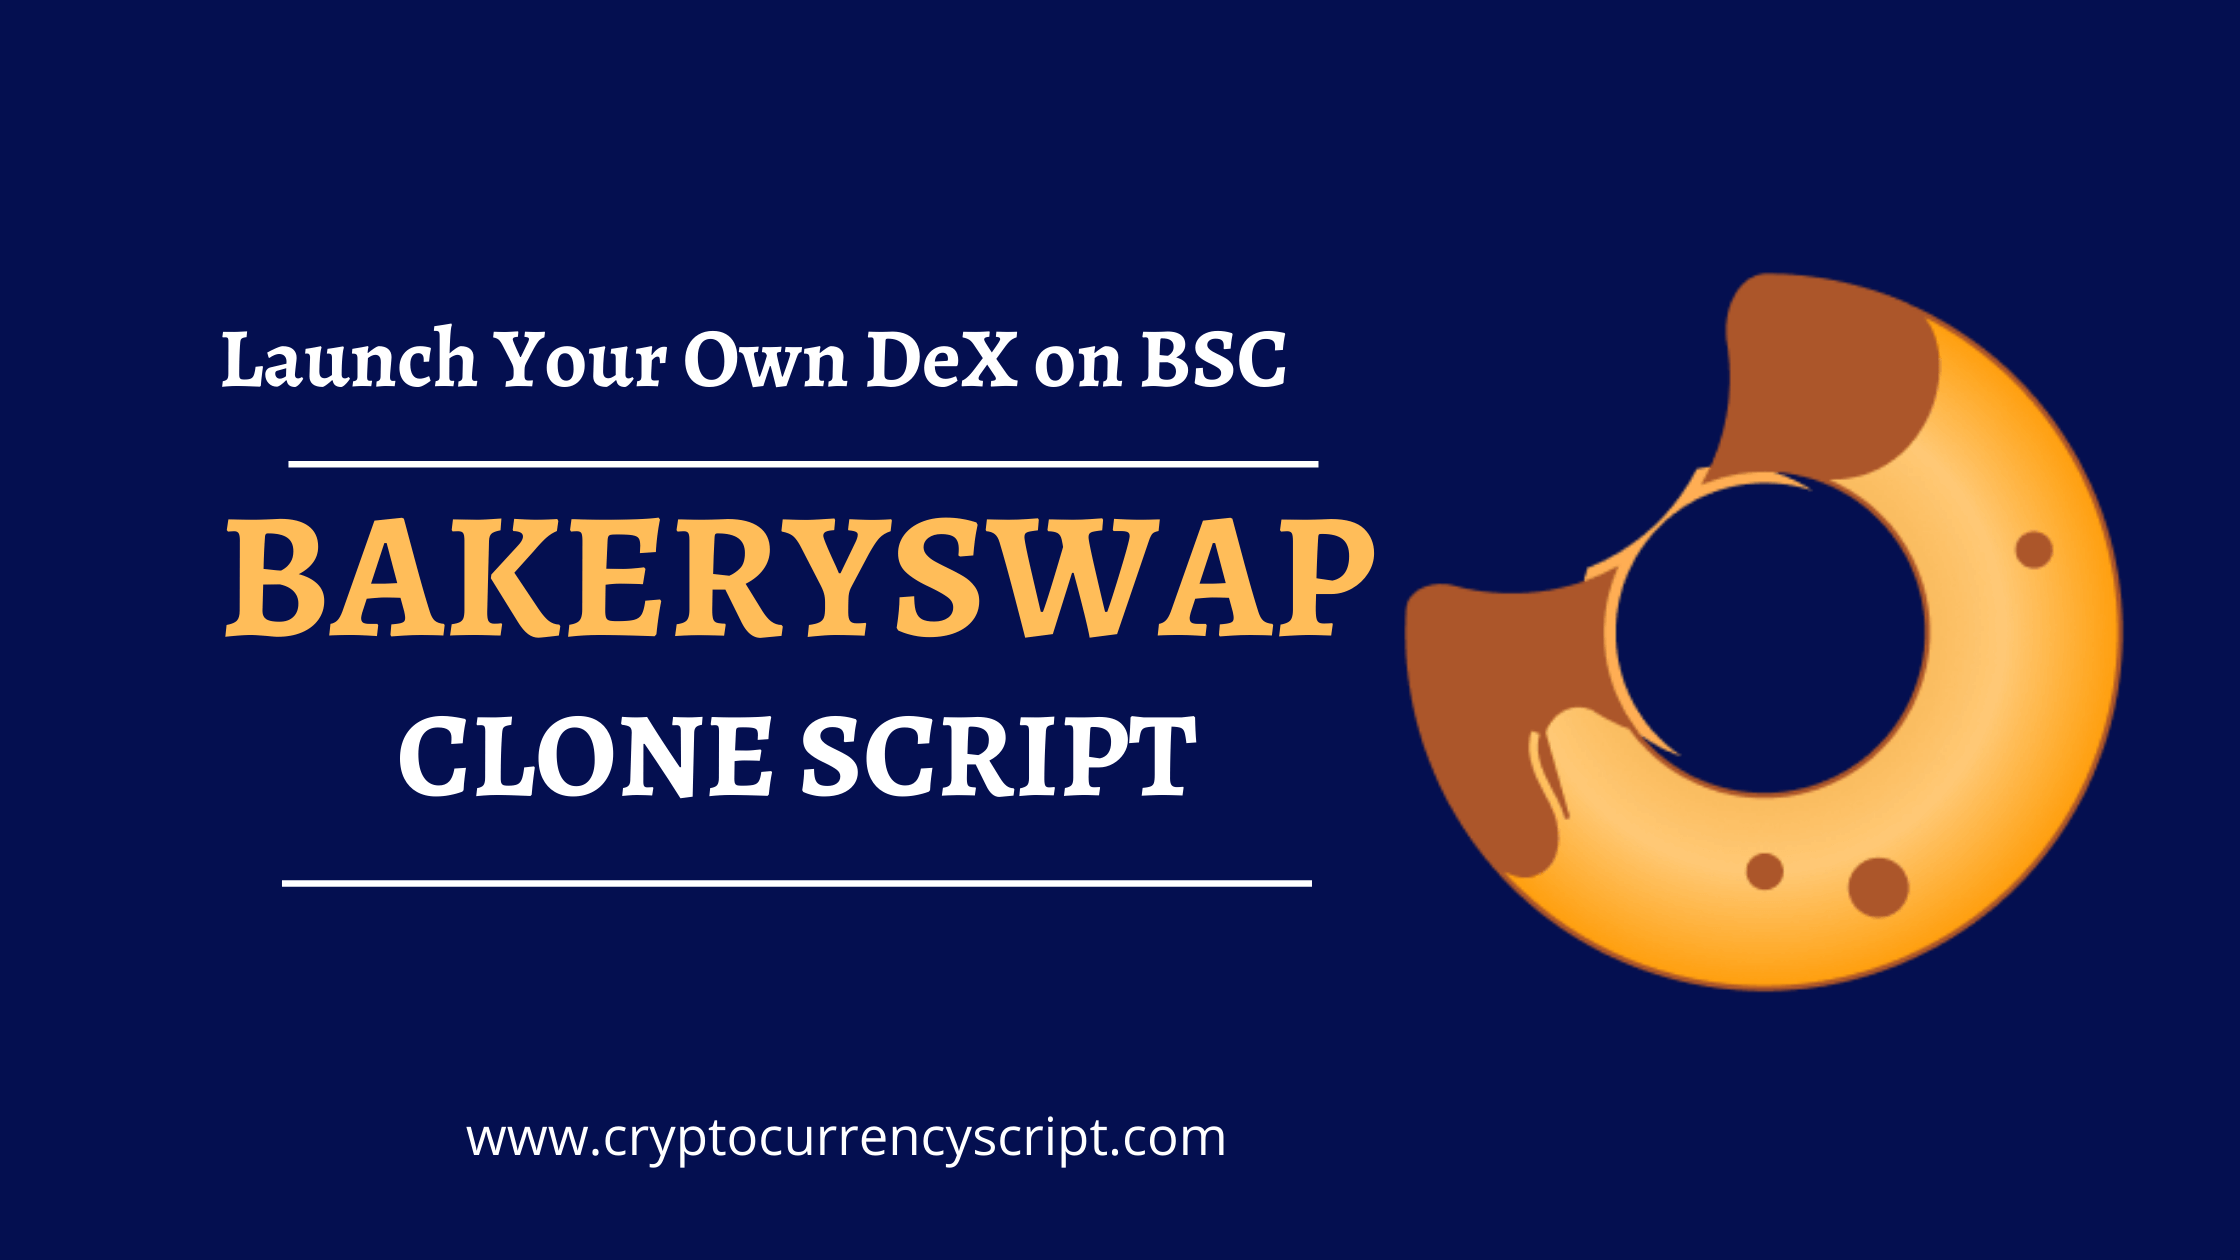 BakerySwap Clone Script – To create an effective DeFi Exchange like BakerySwap